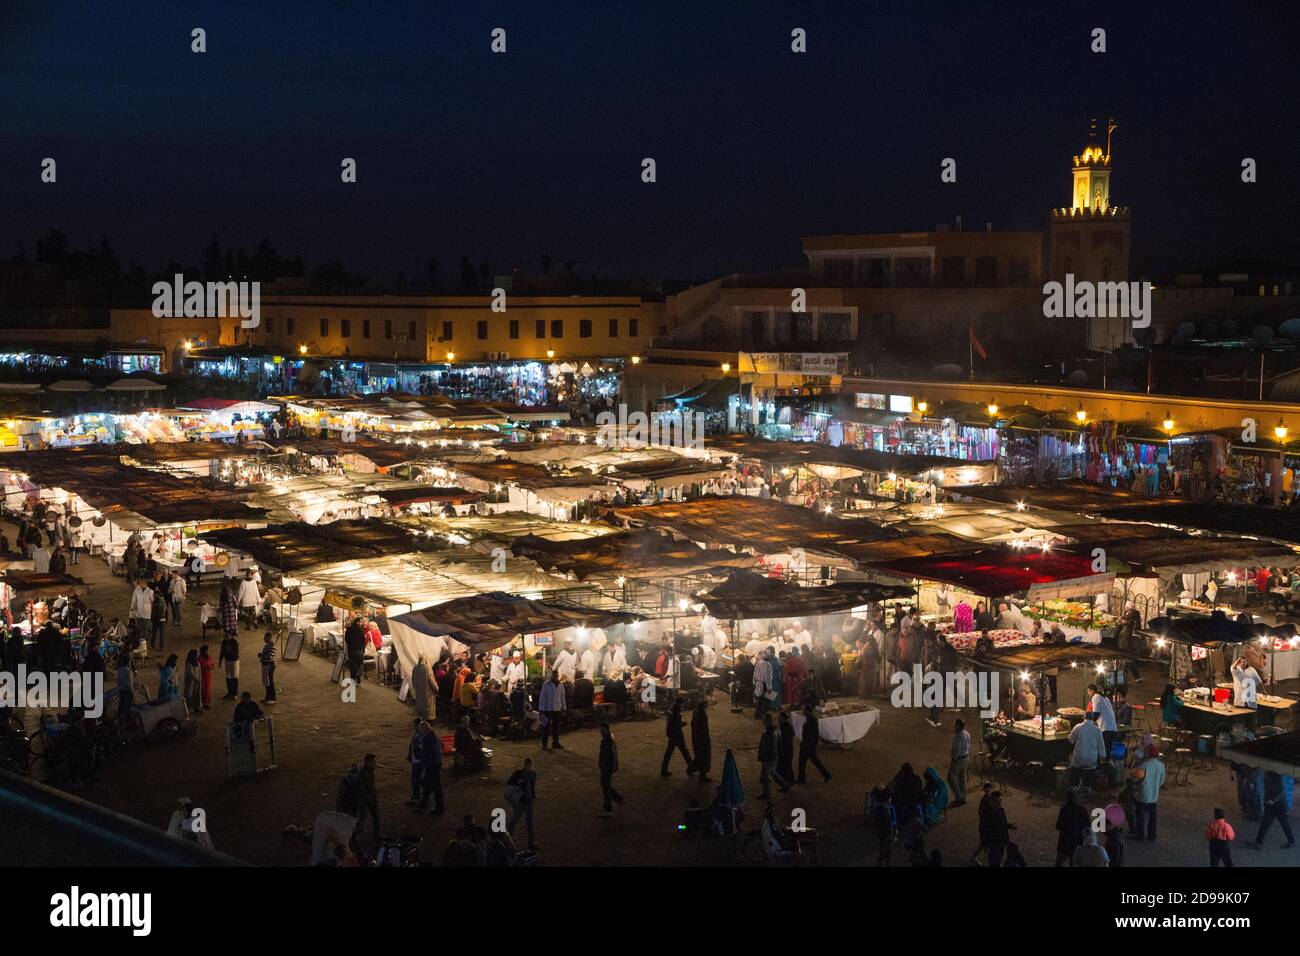 Marrakech: A Feast for the Senses